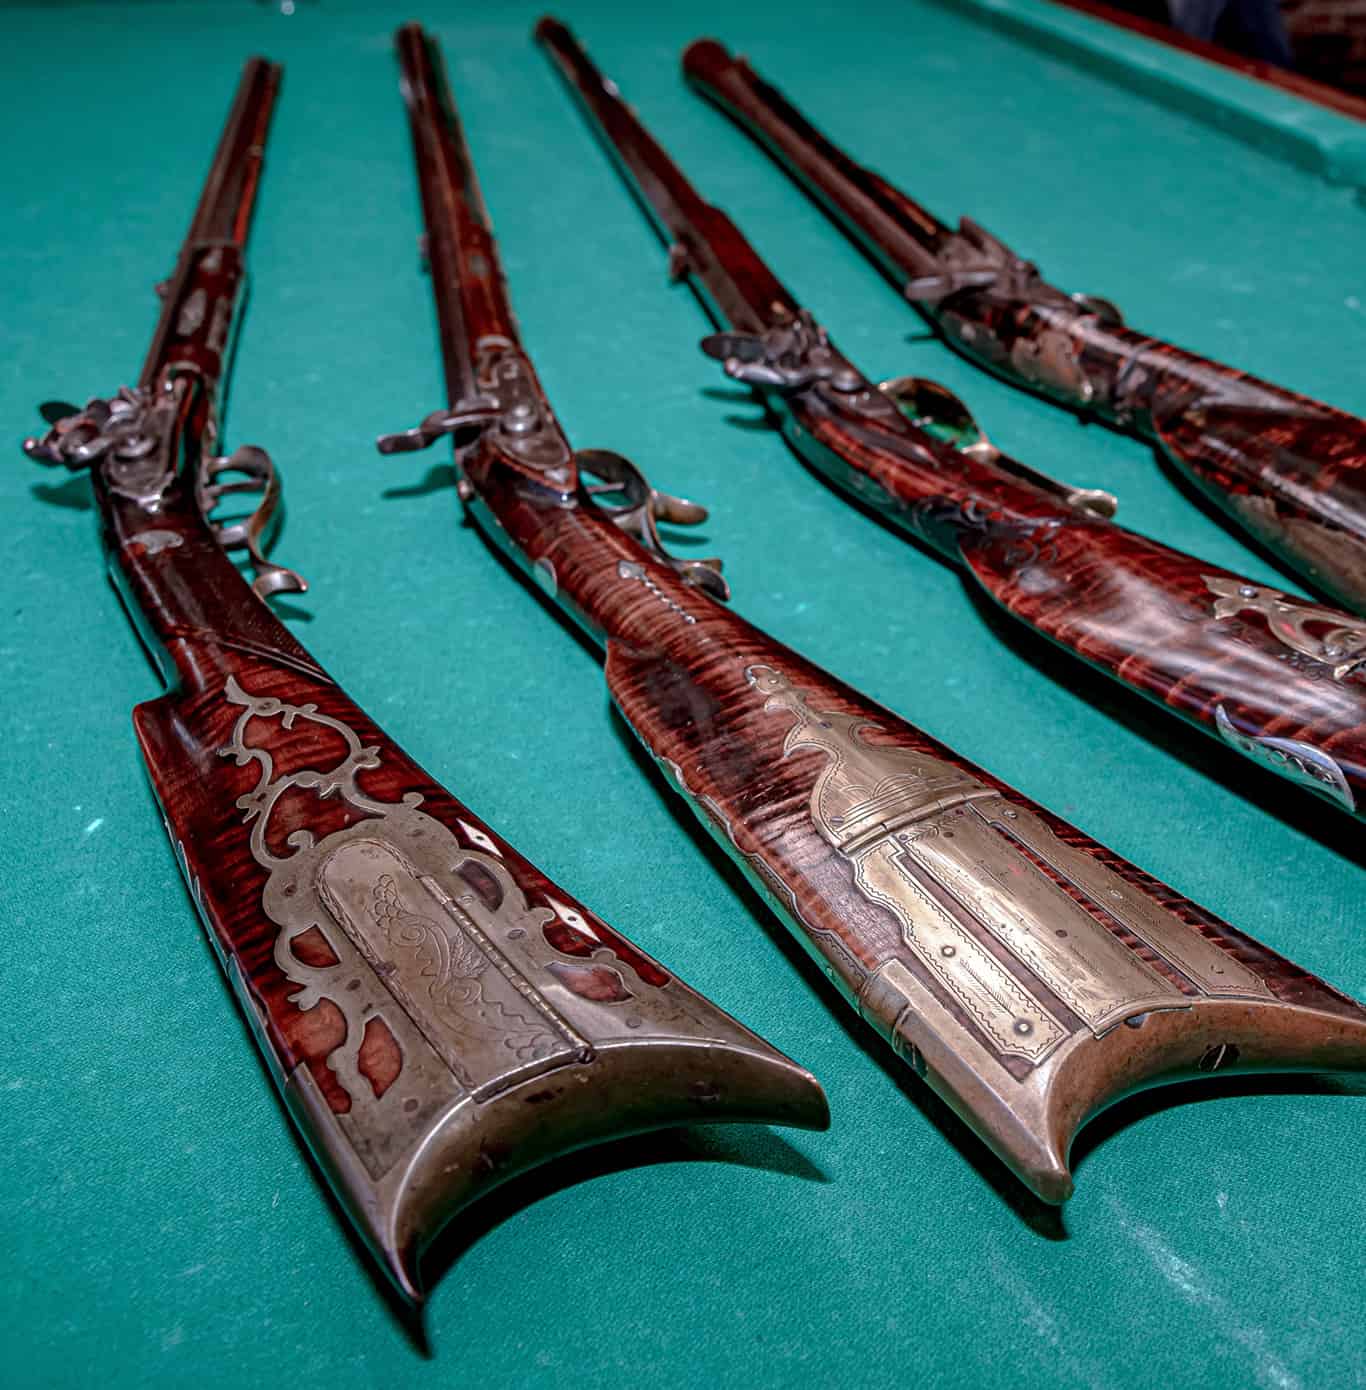 Steve Boyleston's Muskets - Rifle-Making and Early American Firearms